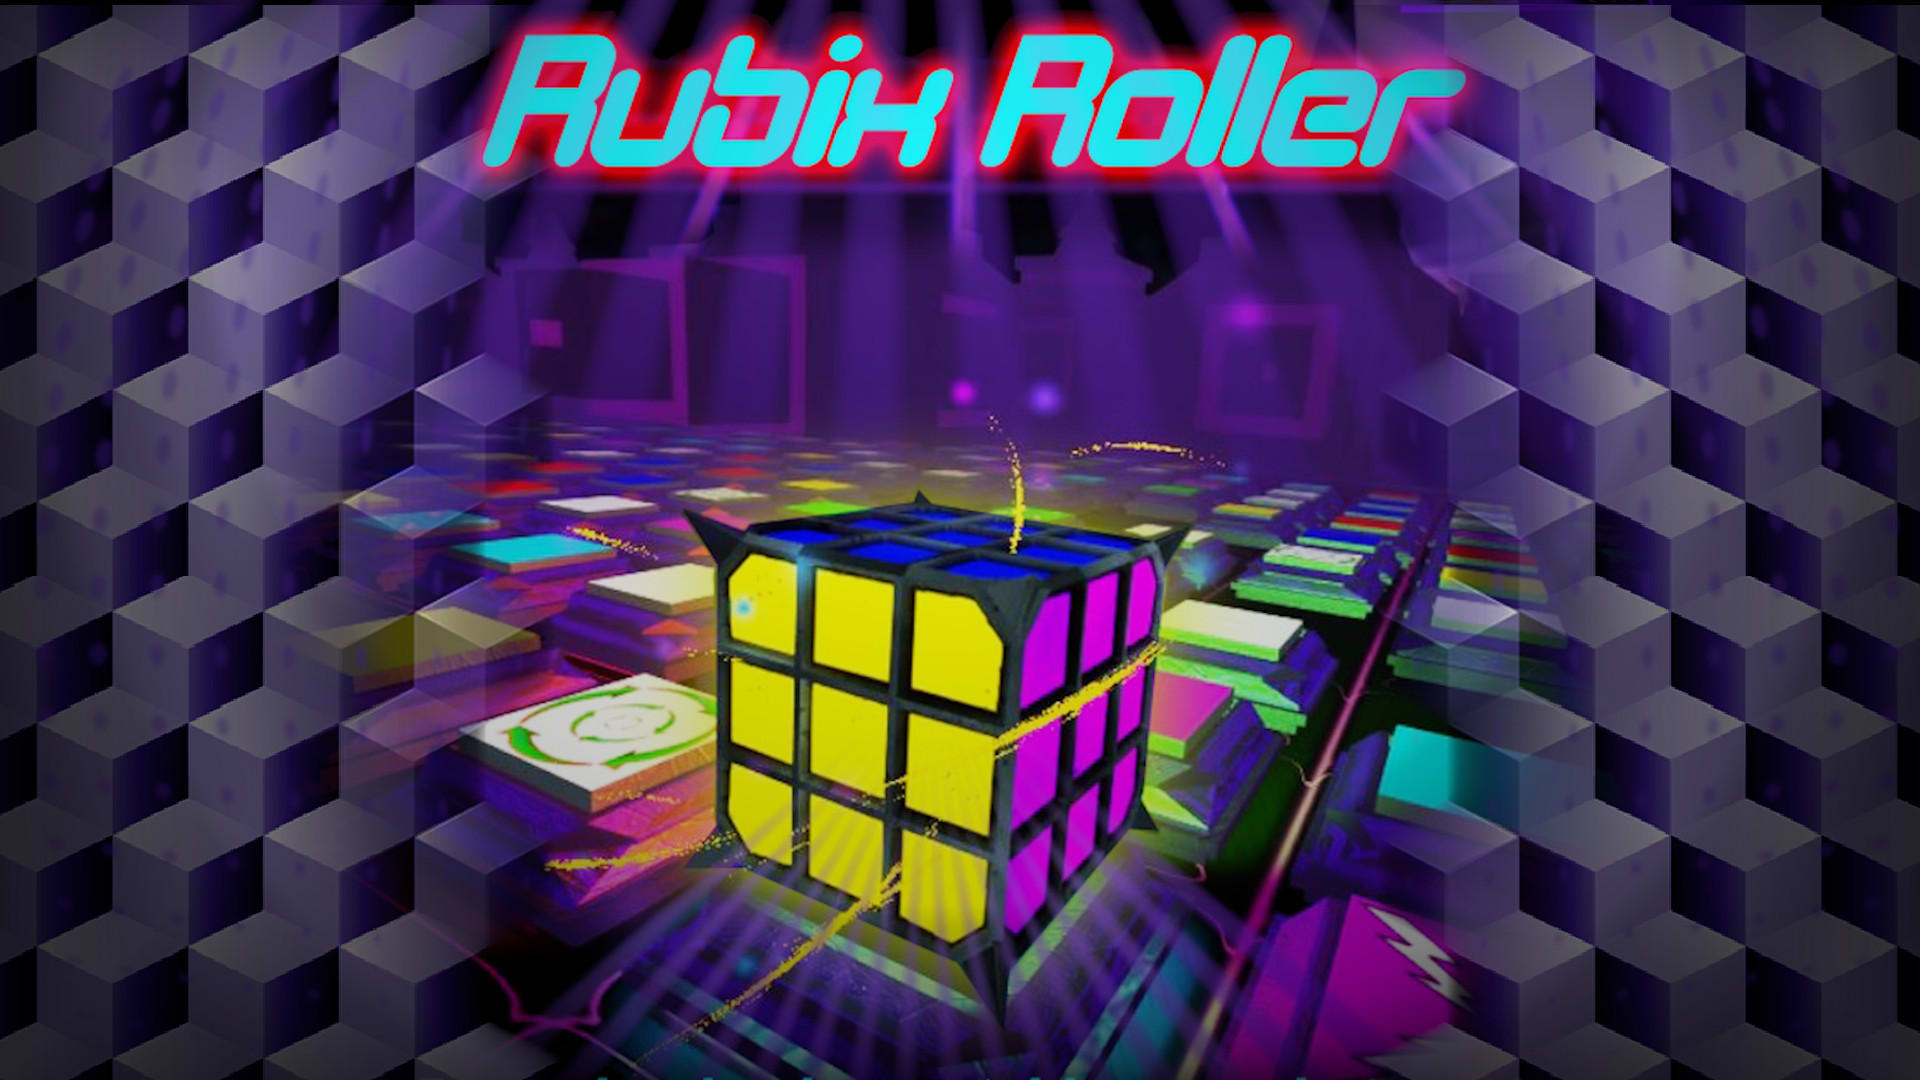 Rubix Roller